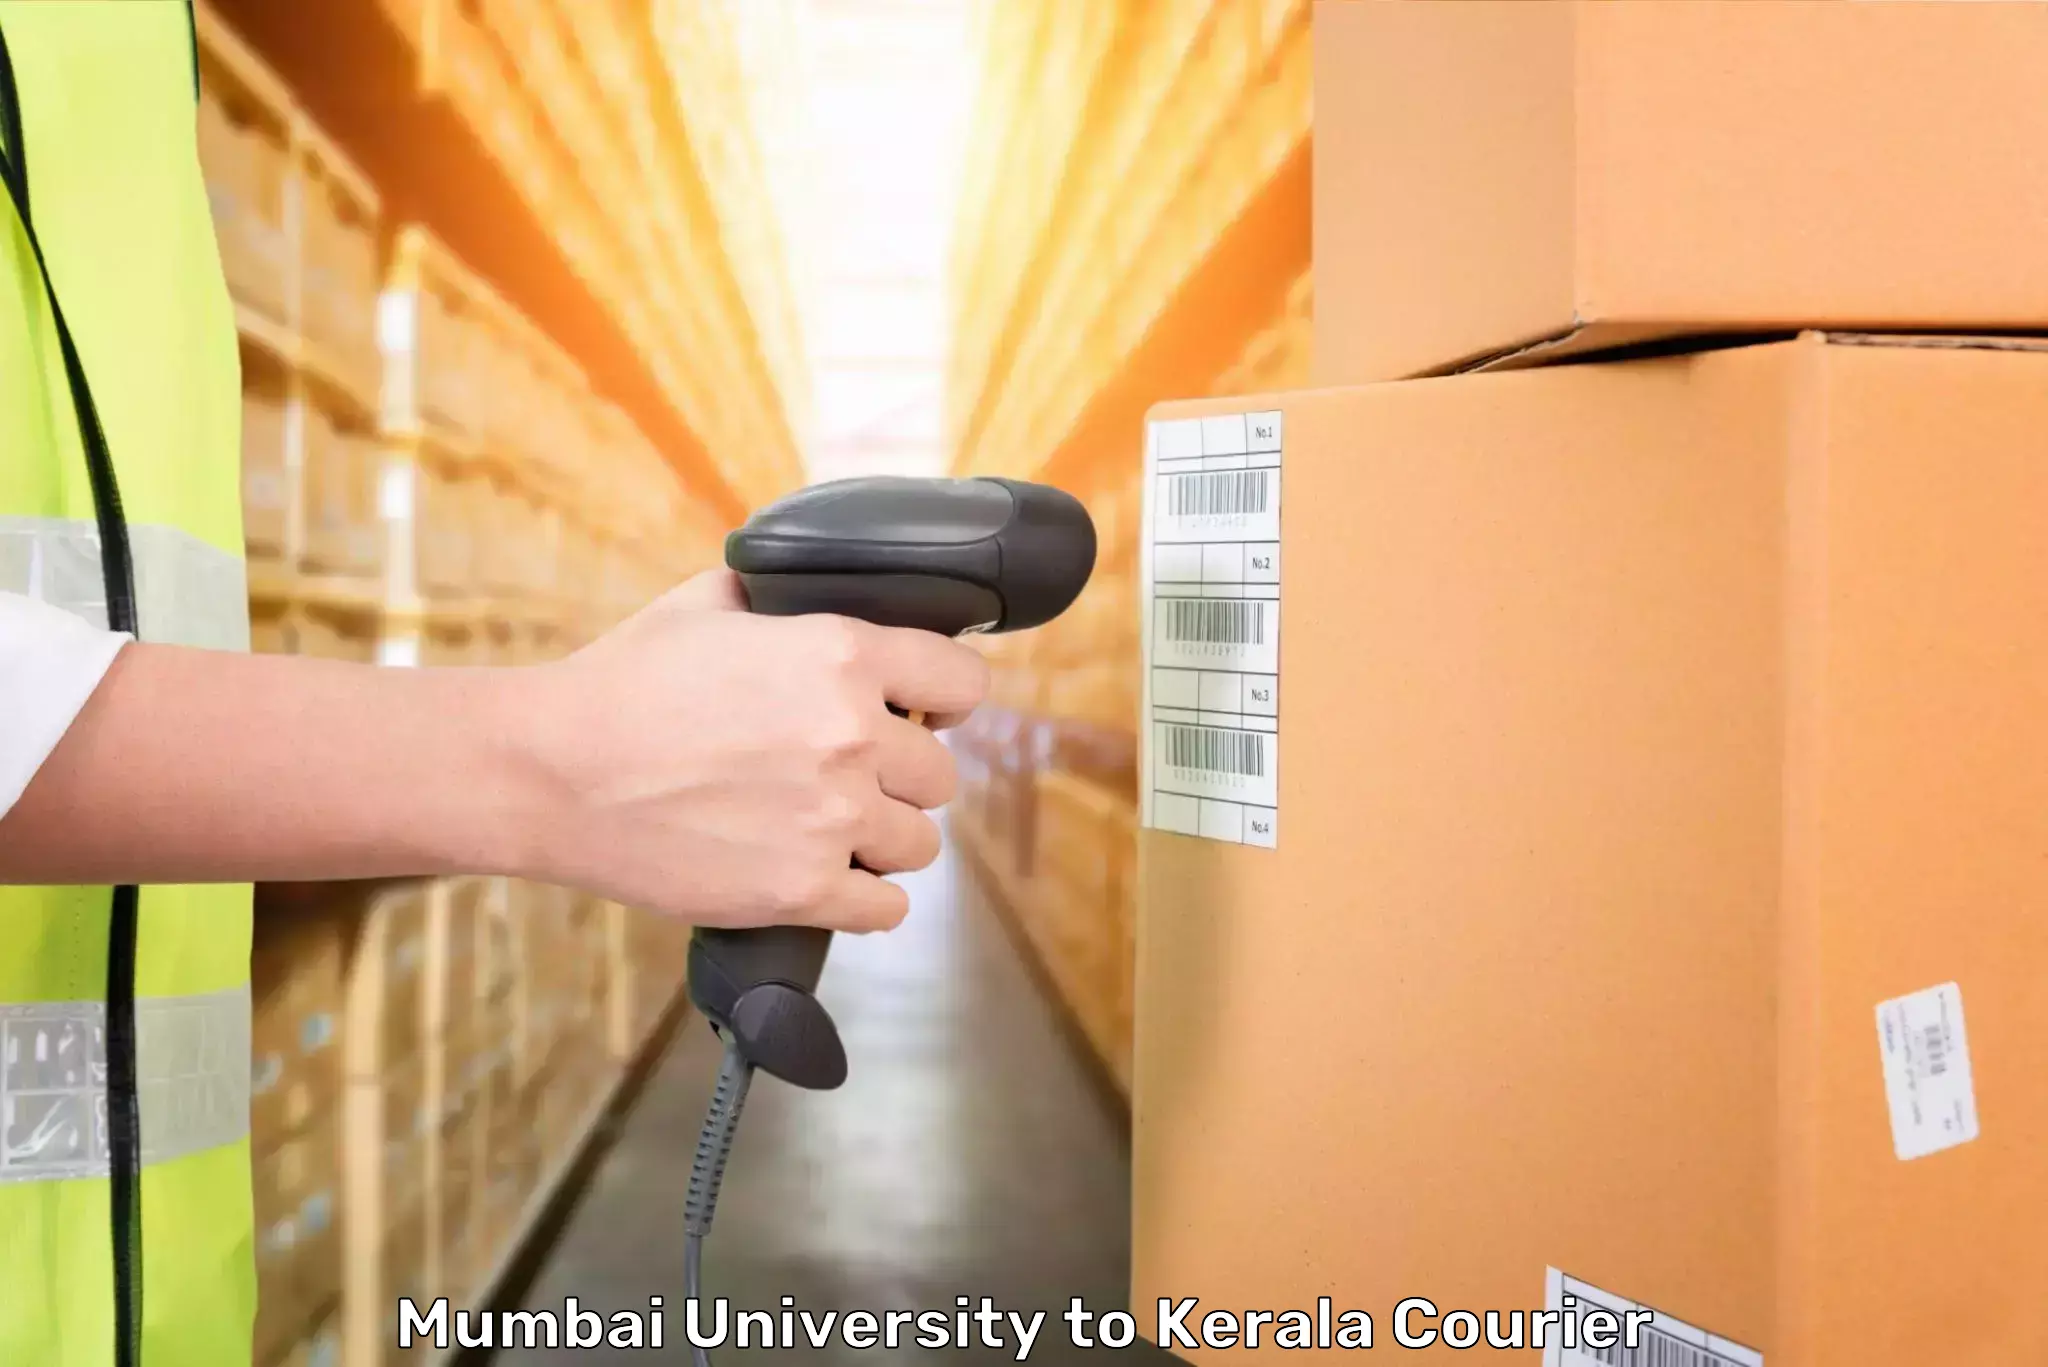 Same day luggage service in Mumbai University to Munnar